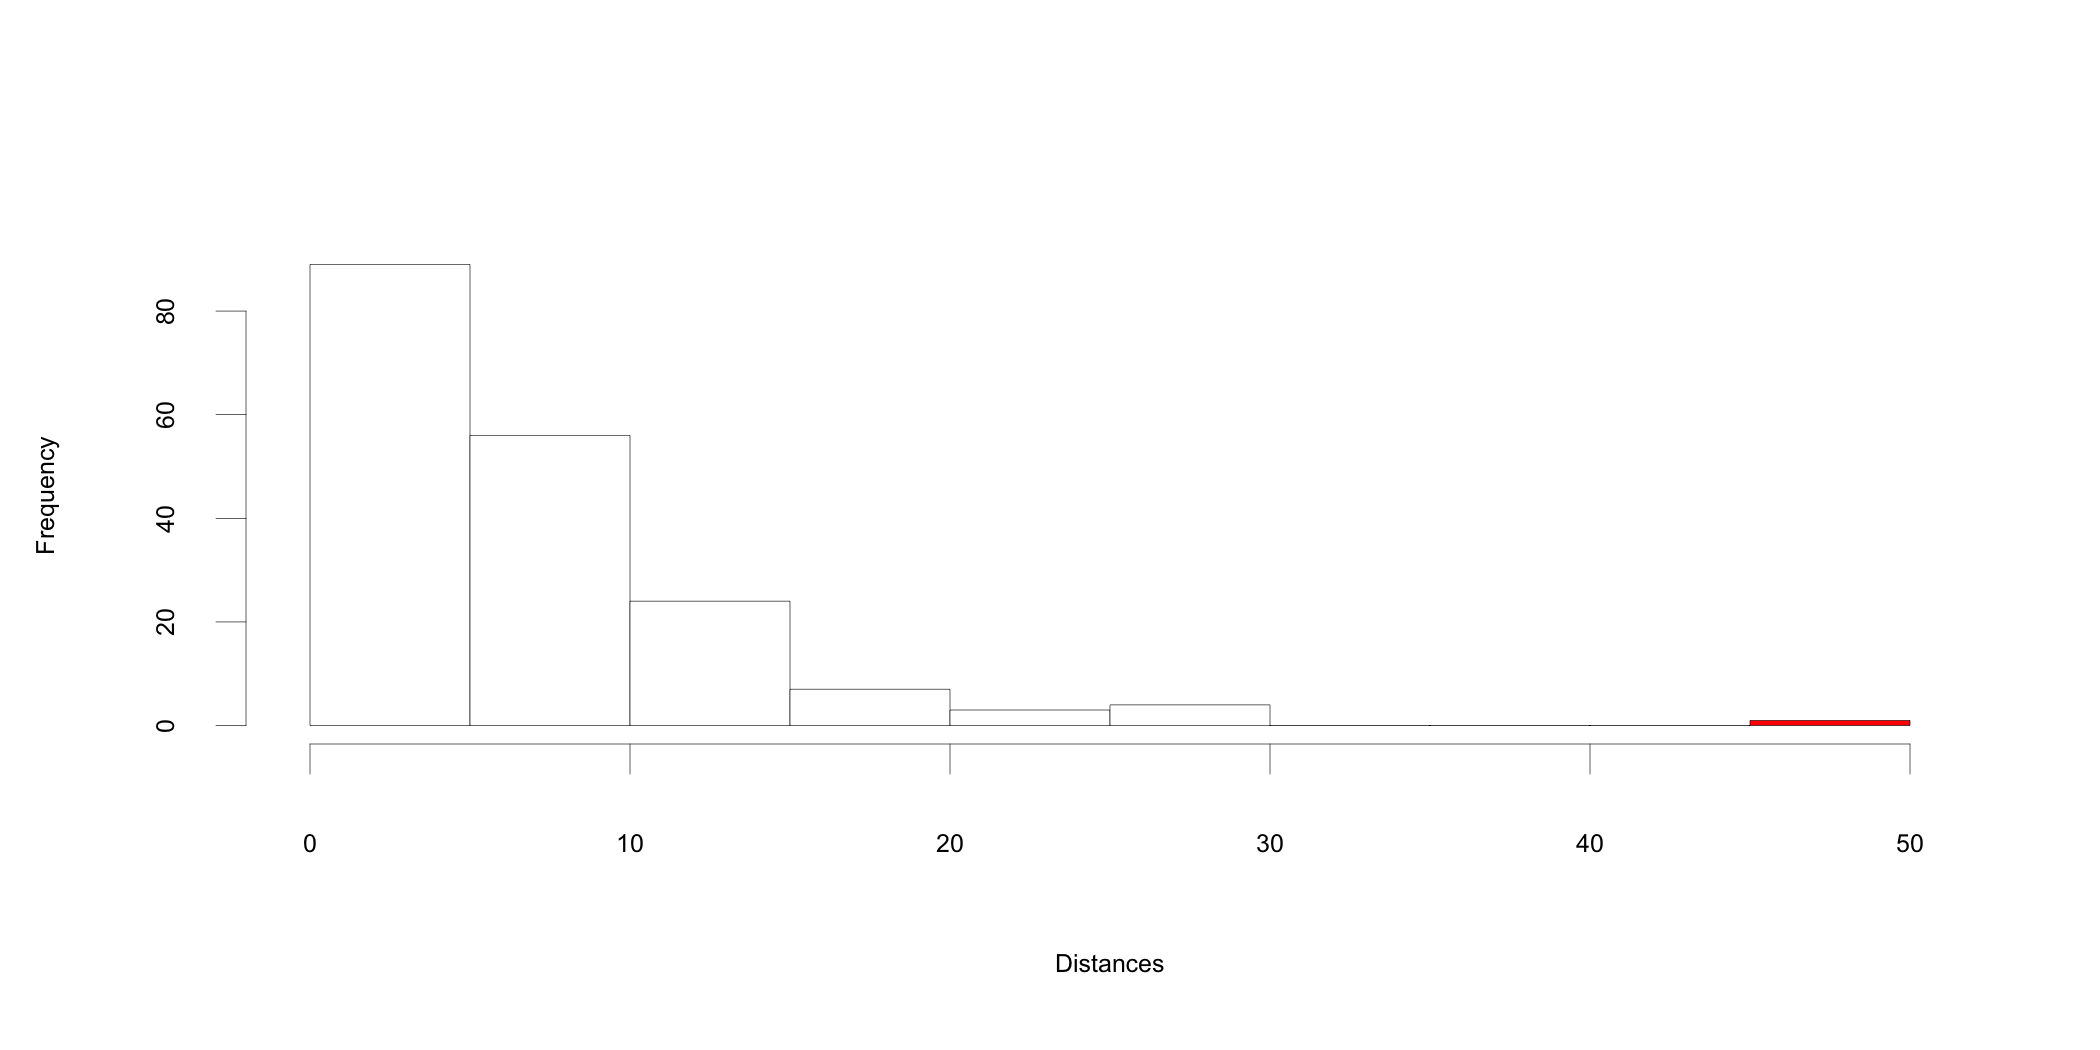 Histogram of Mahalanobis distances